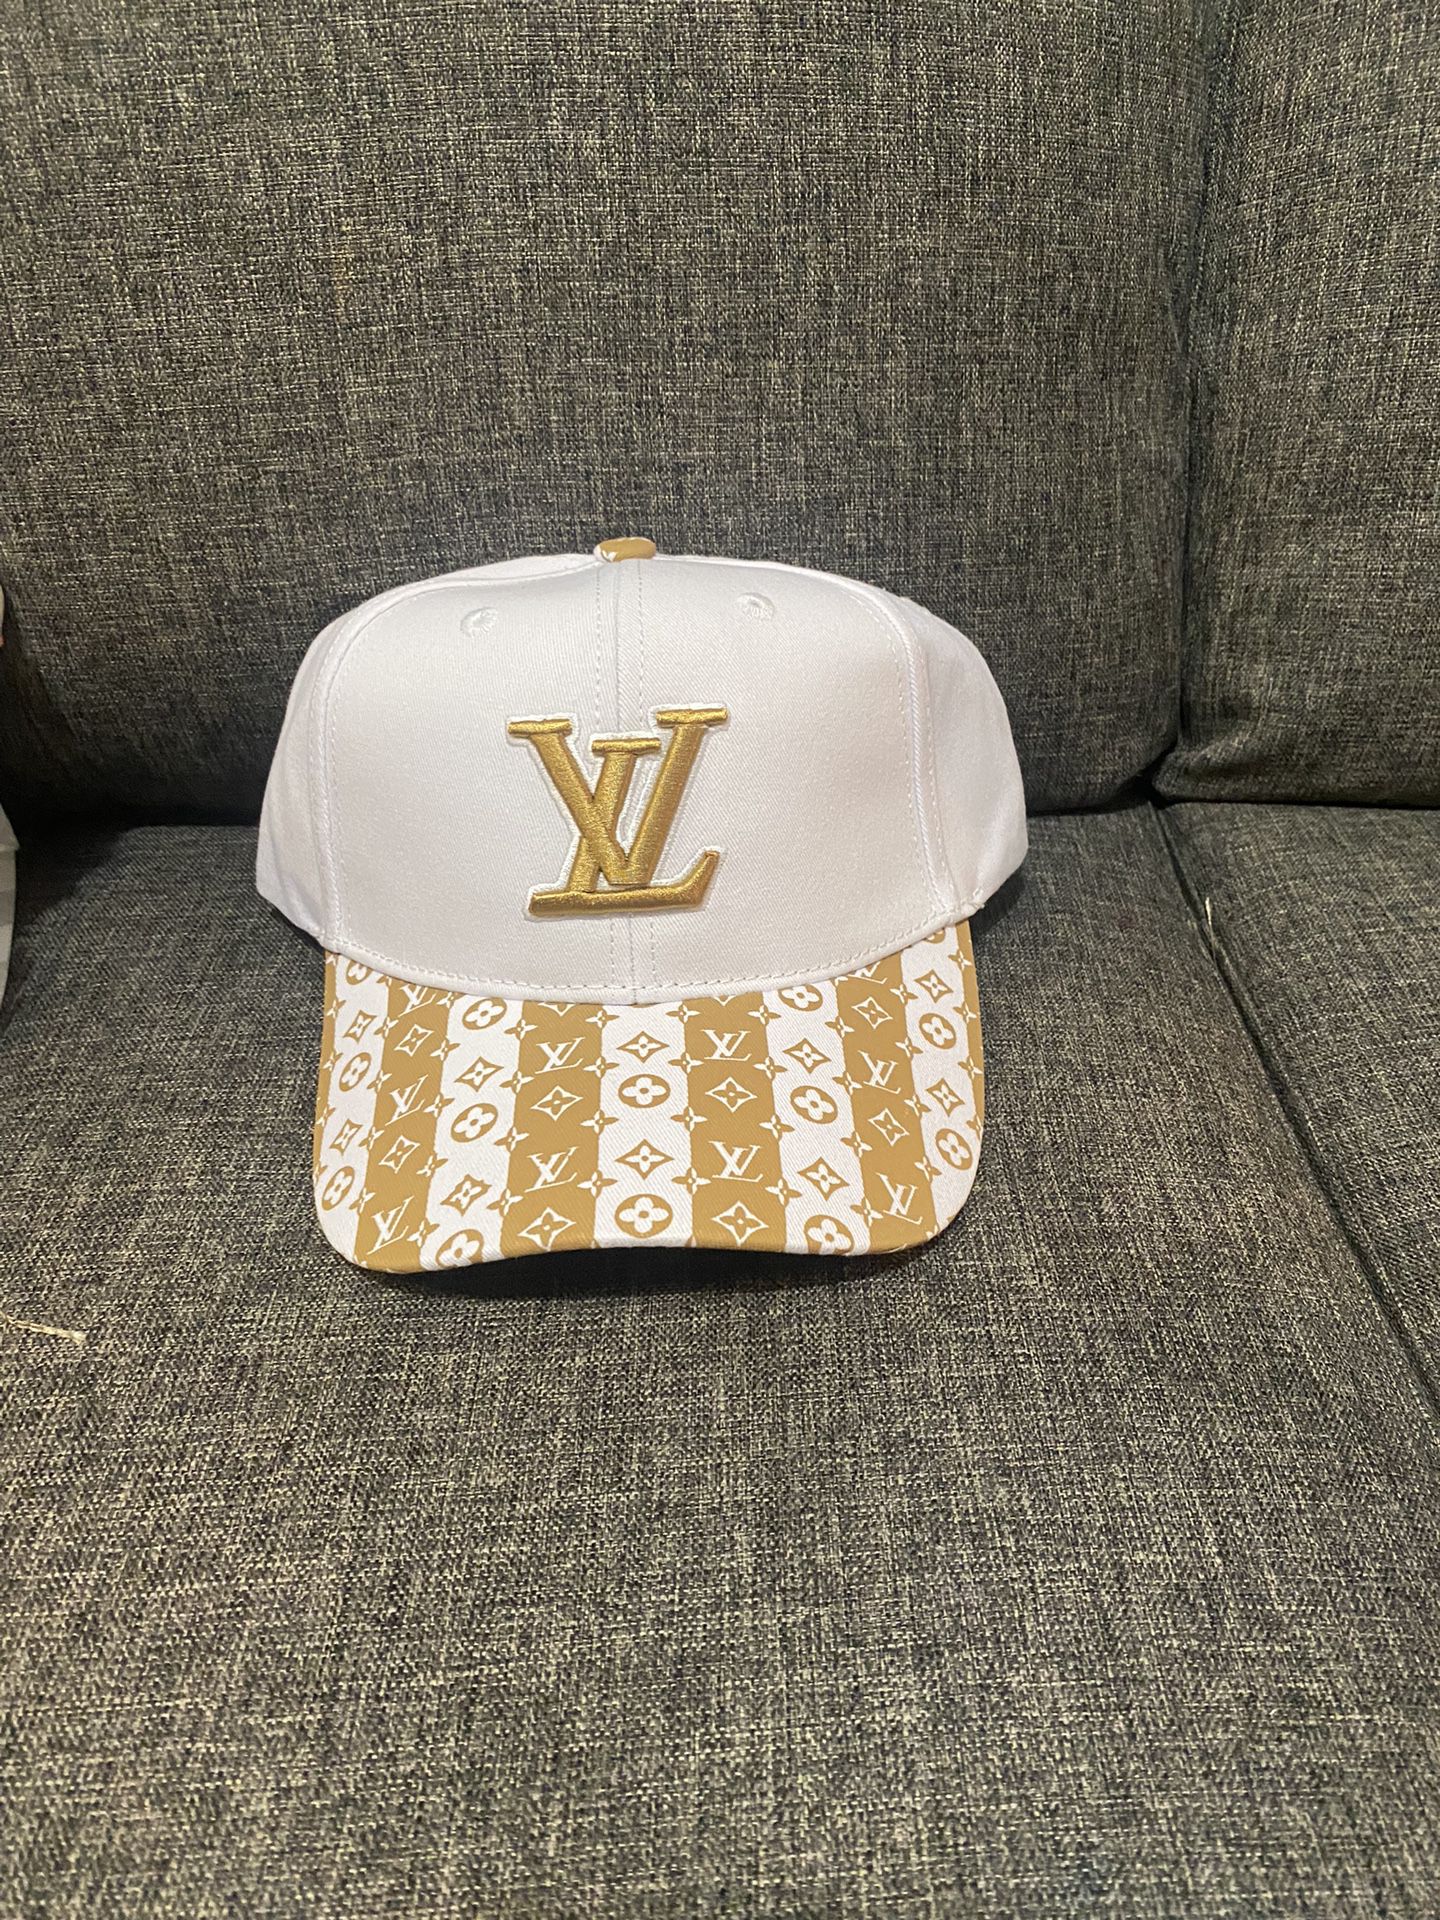 Louis Vuitton Unisex Hat for Sale in Mountain City, TN - OfferUp